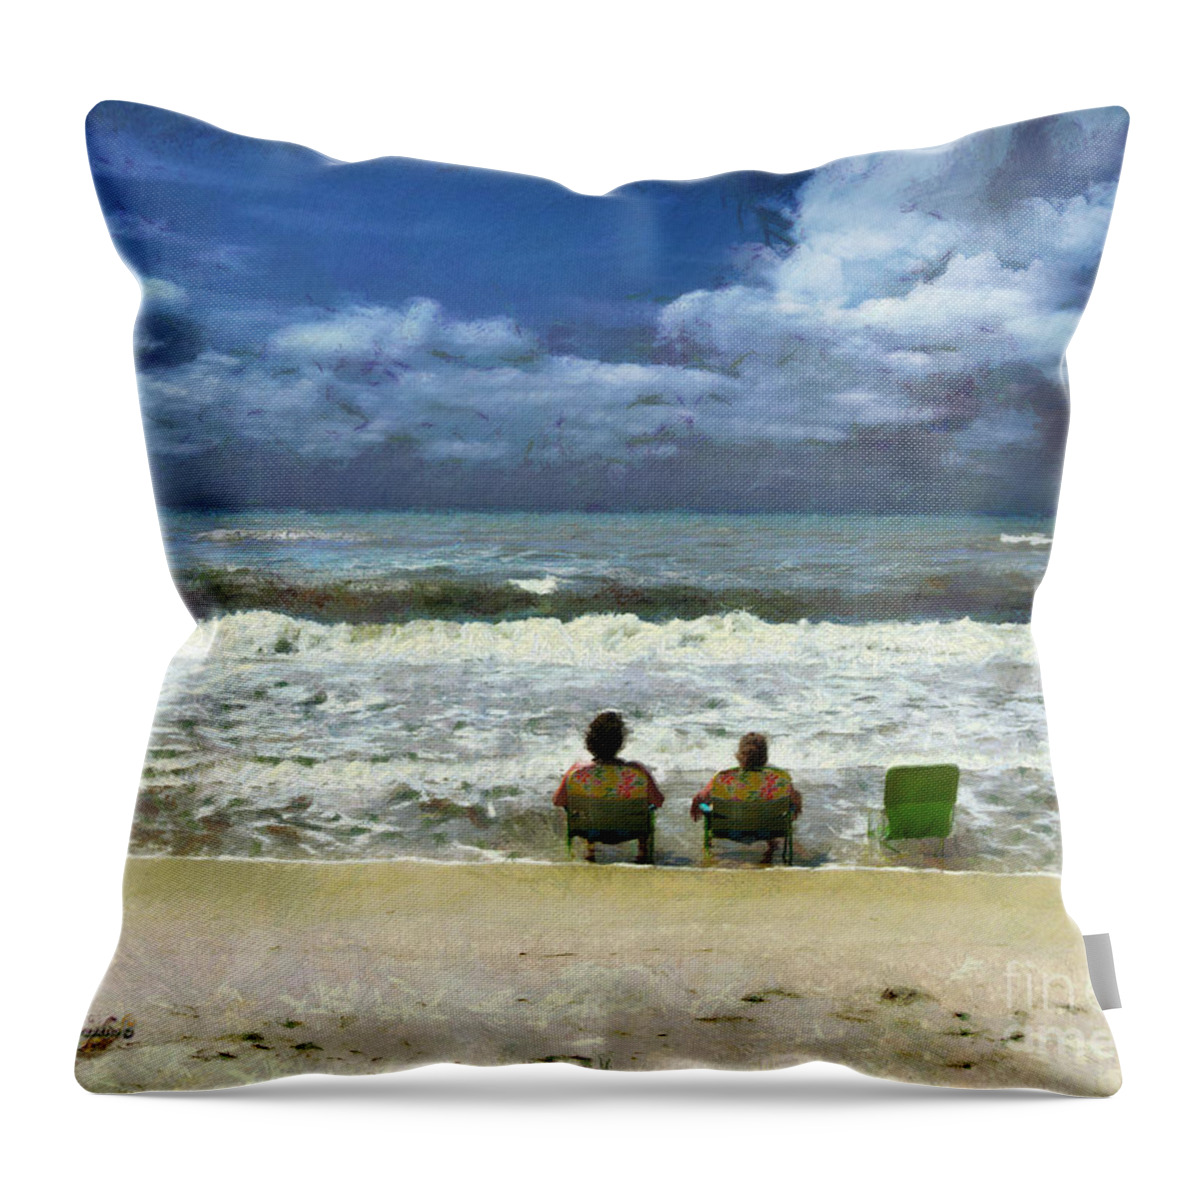 Digital Art Throw Pillow featuring the digital art Life's a Beach by Rhonda Strickland